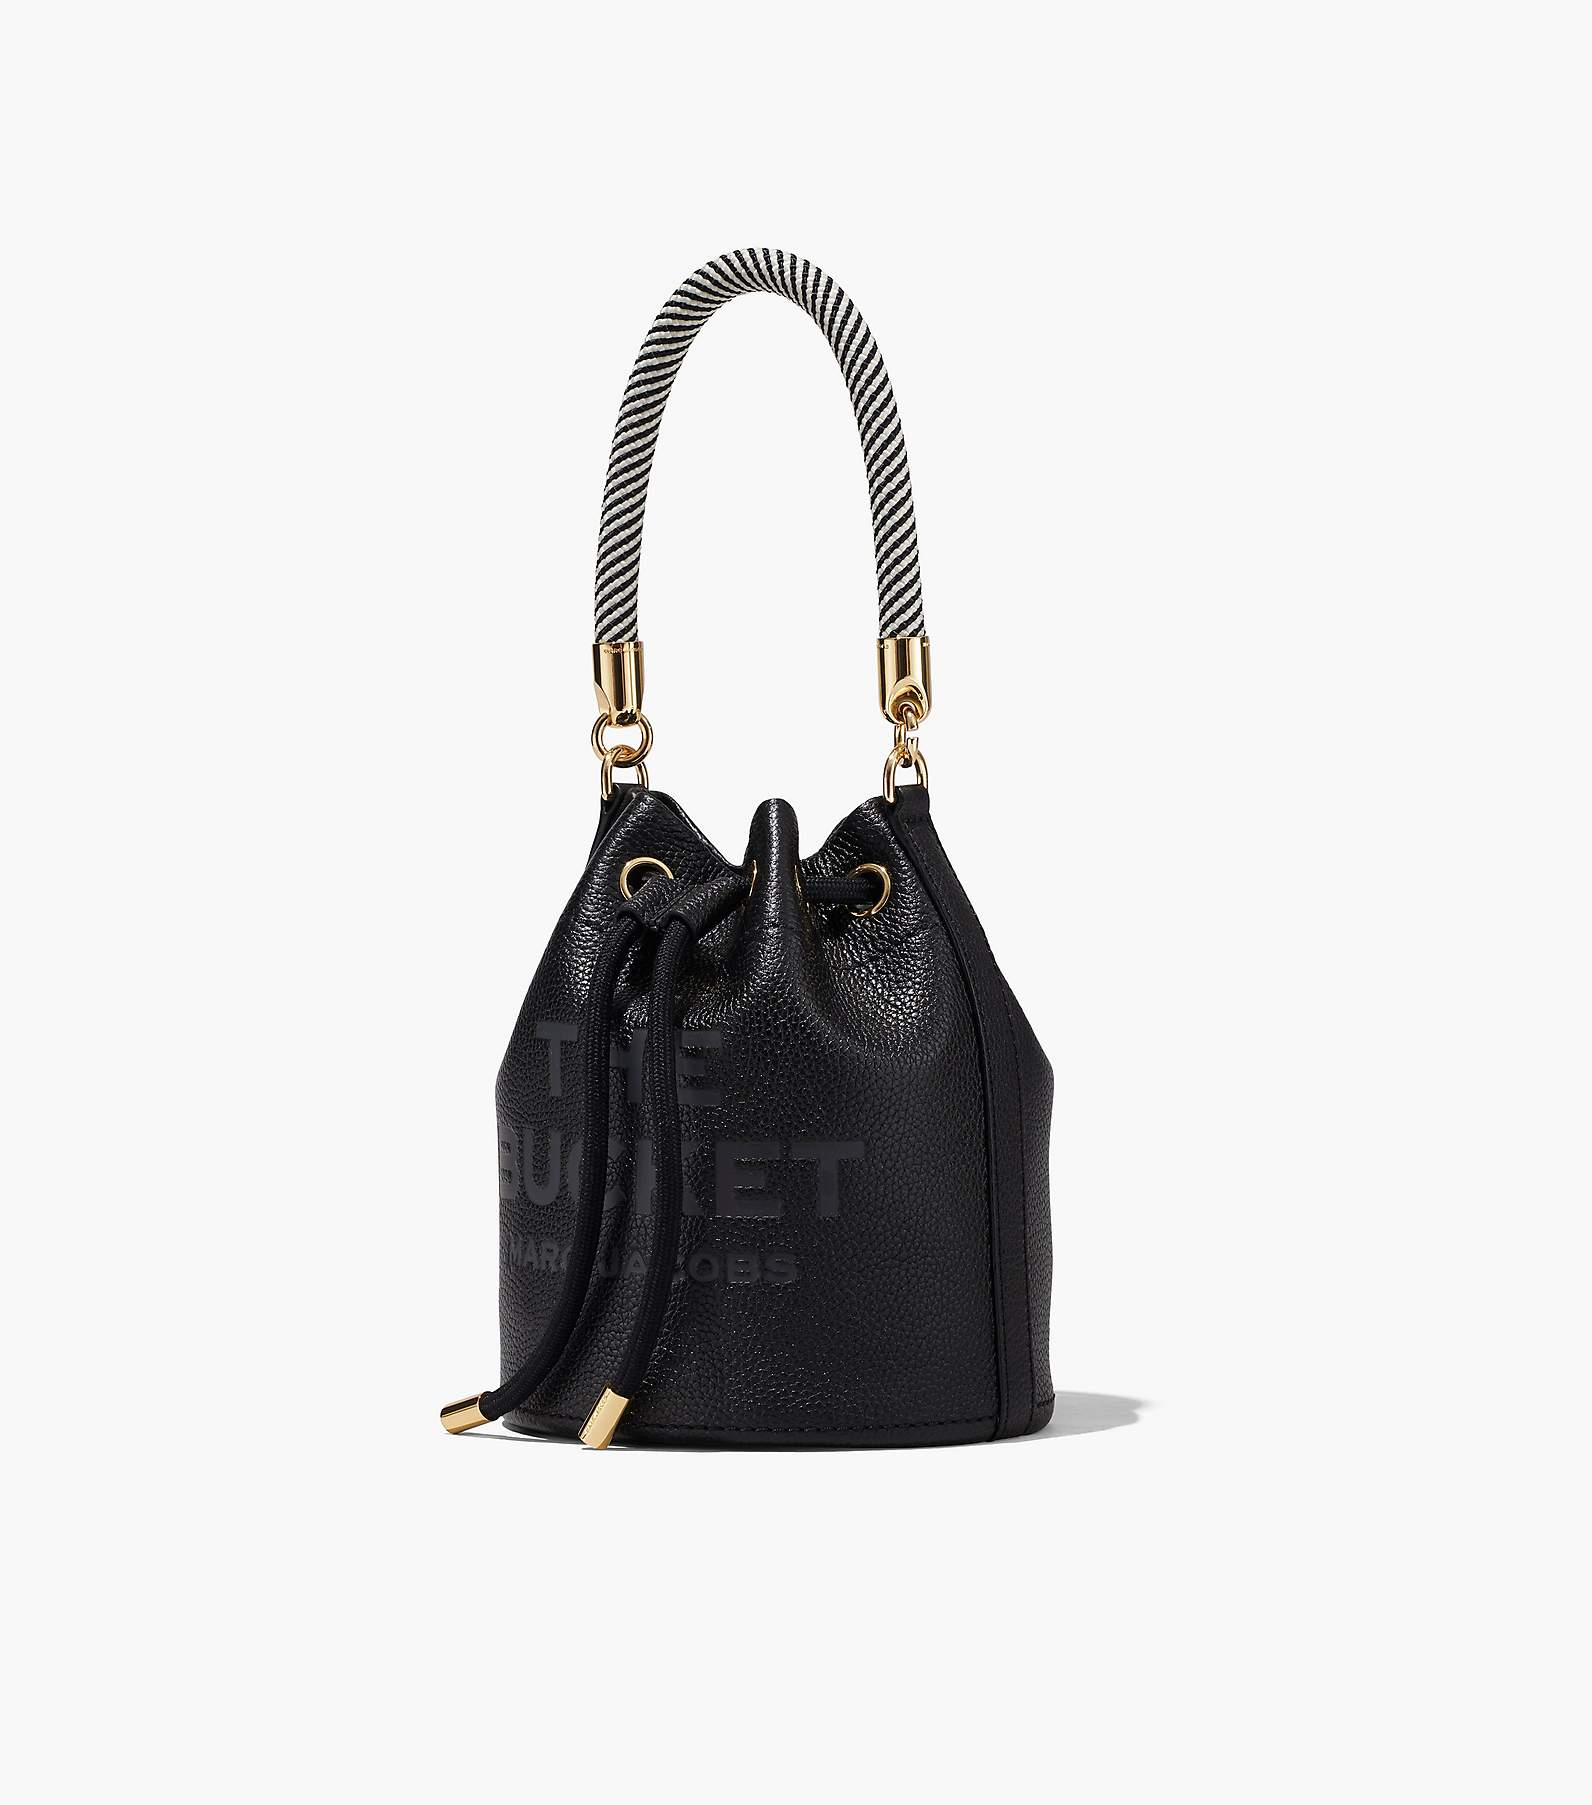 Louis Vuitton Mini Bucket Project Bag on Mercari